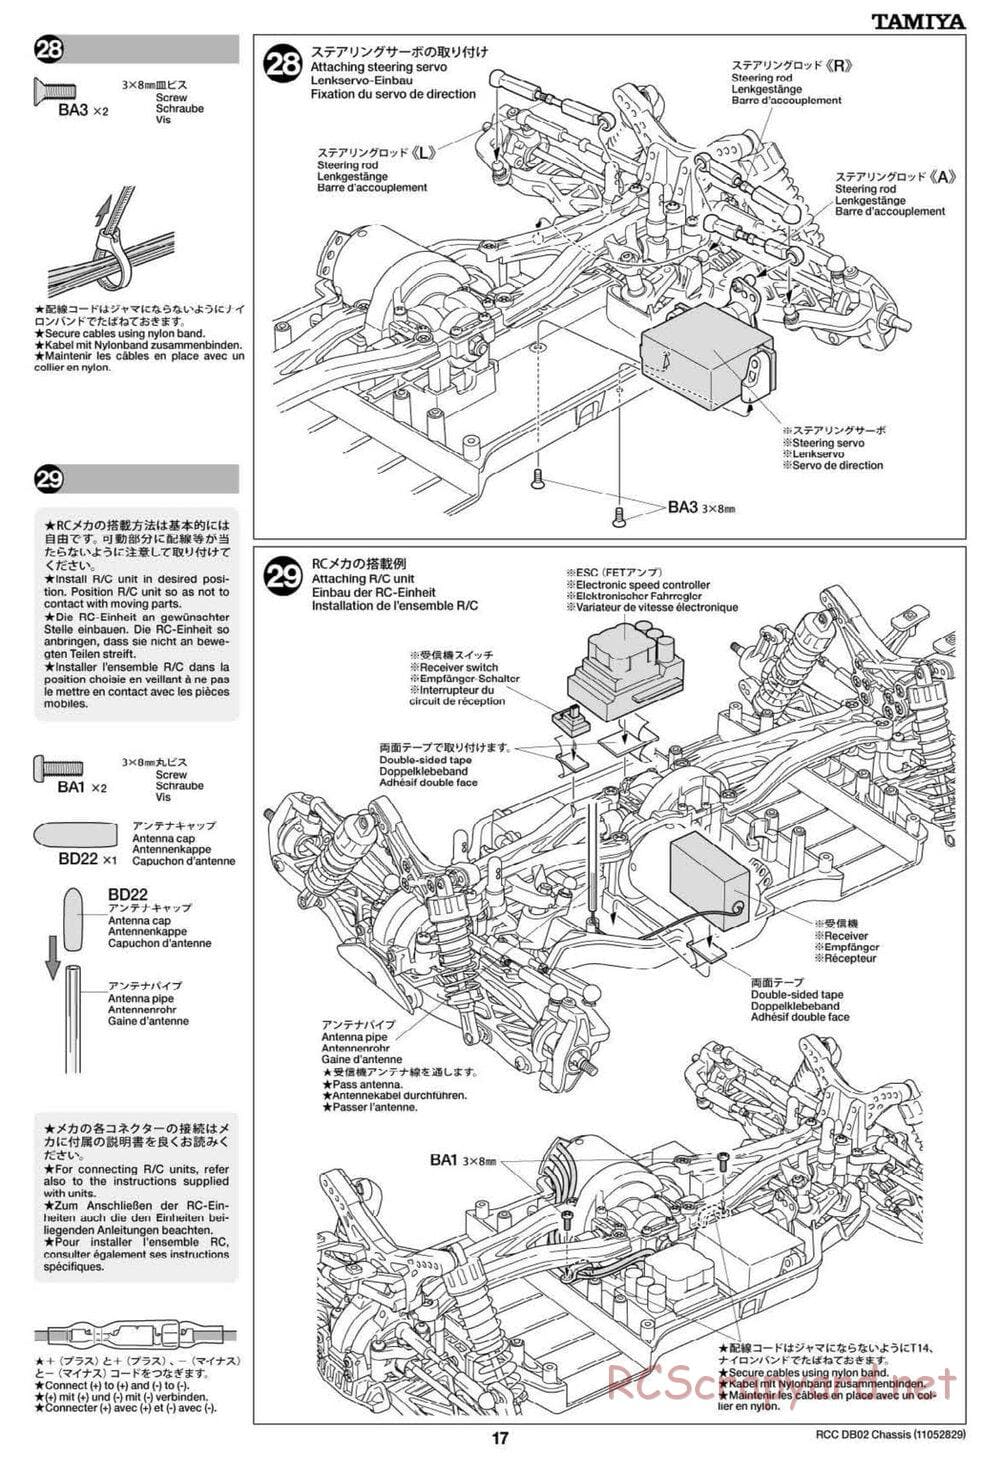 Tamiya - Leonis - DB-02 Chassis - Manual - Page 17